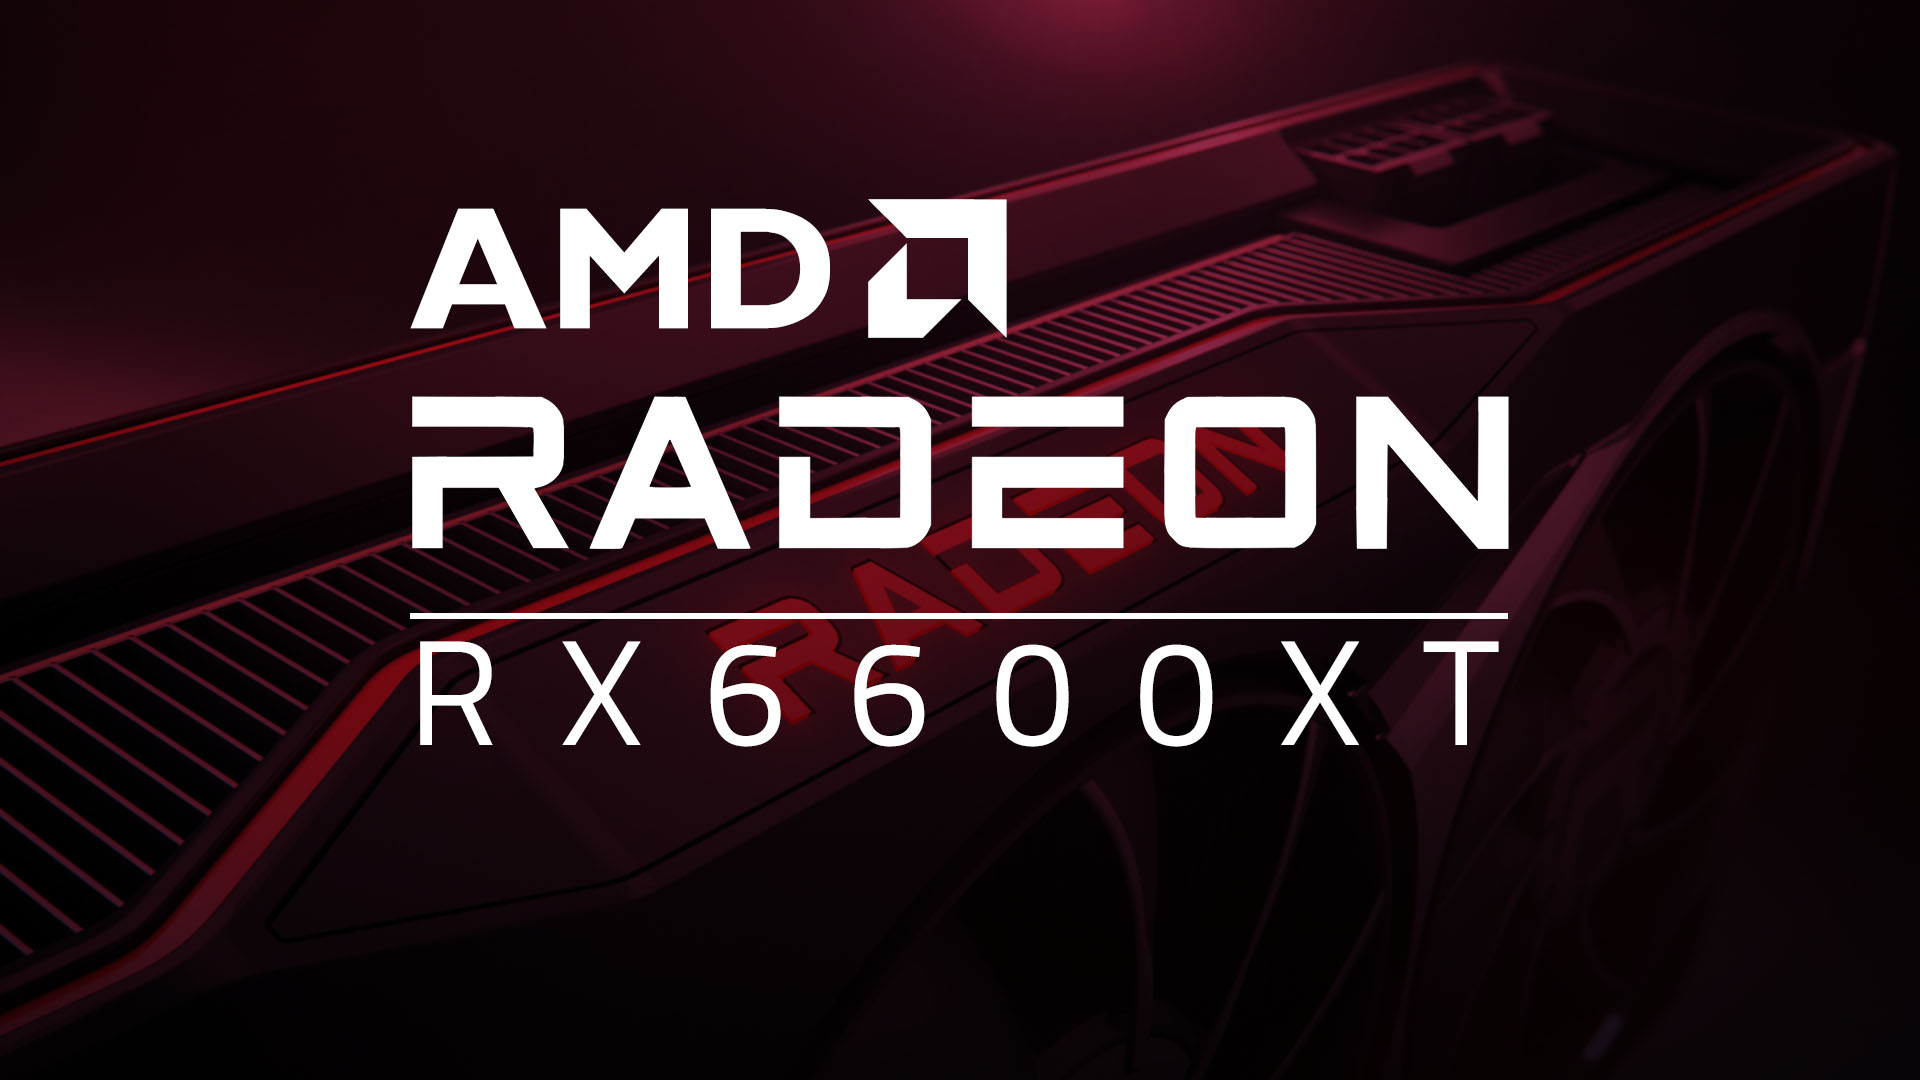 AMD Radeon RX 6600の詳細判明。8GB GDDR6、PCIe Gen4 x8対応